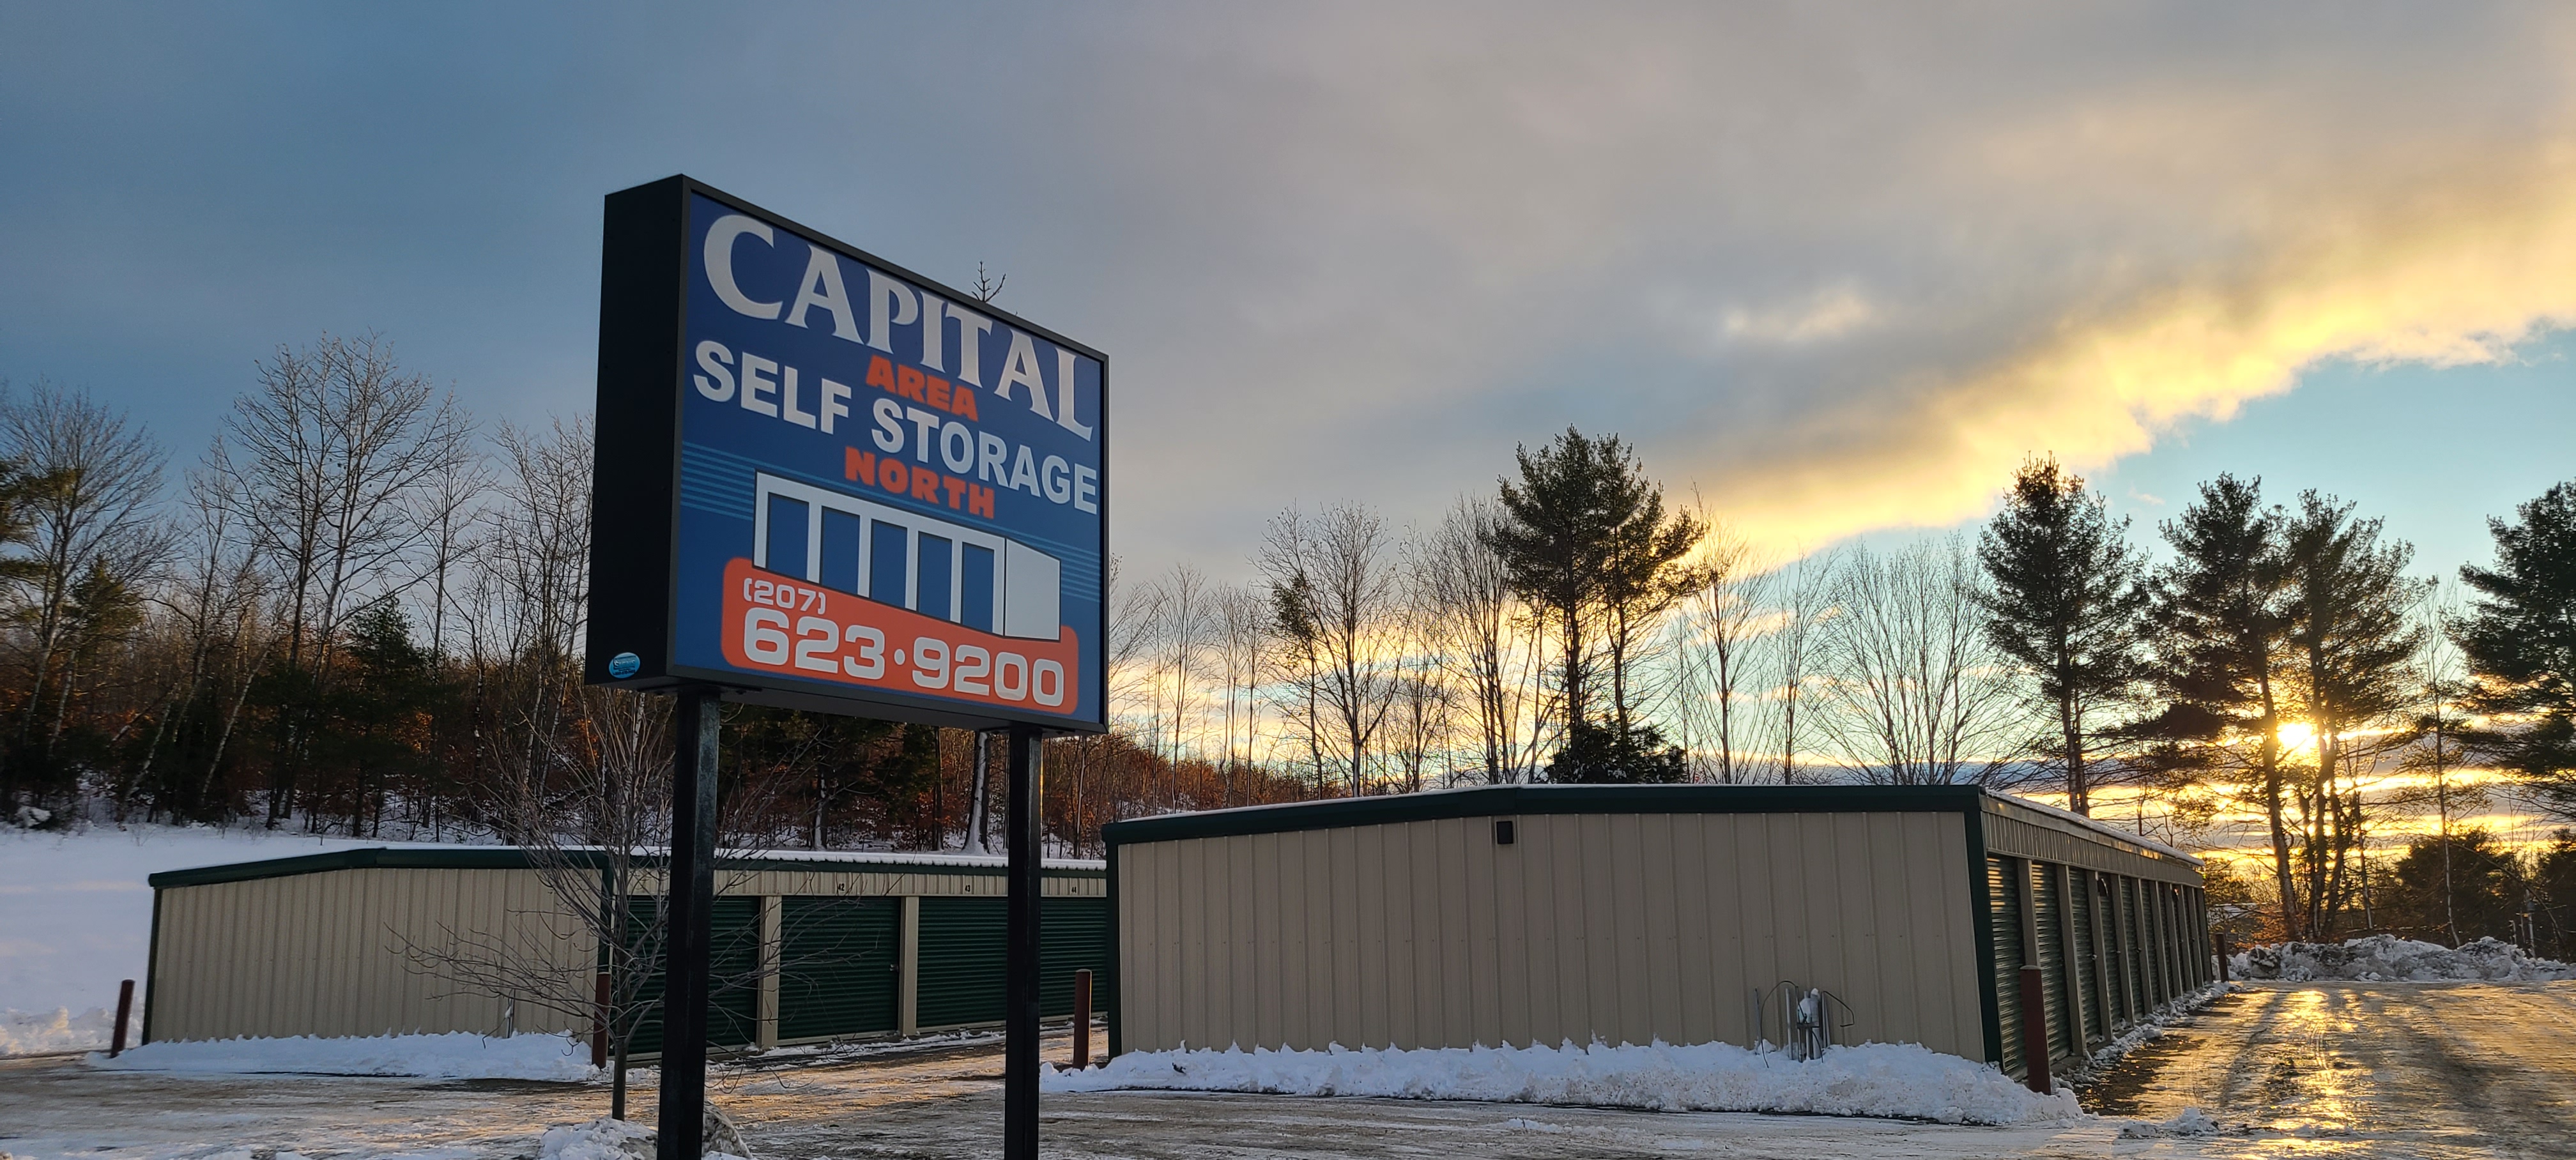 Capital Self Storage North Sign Augusta ME